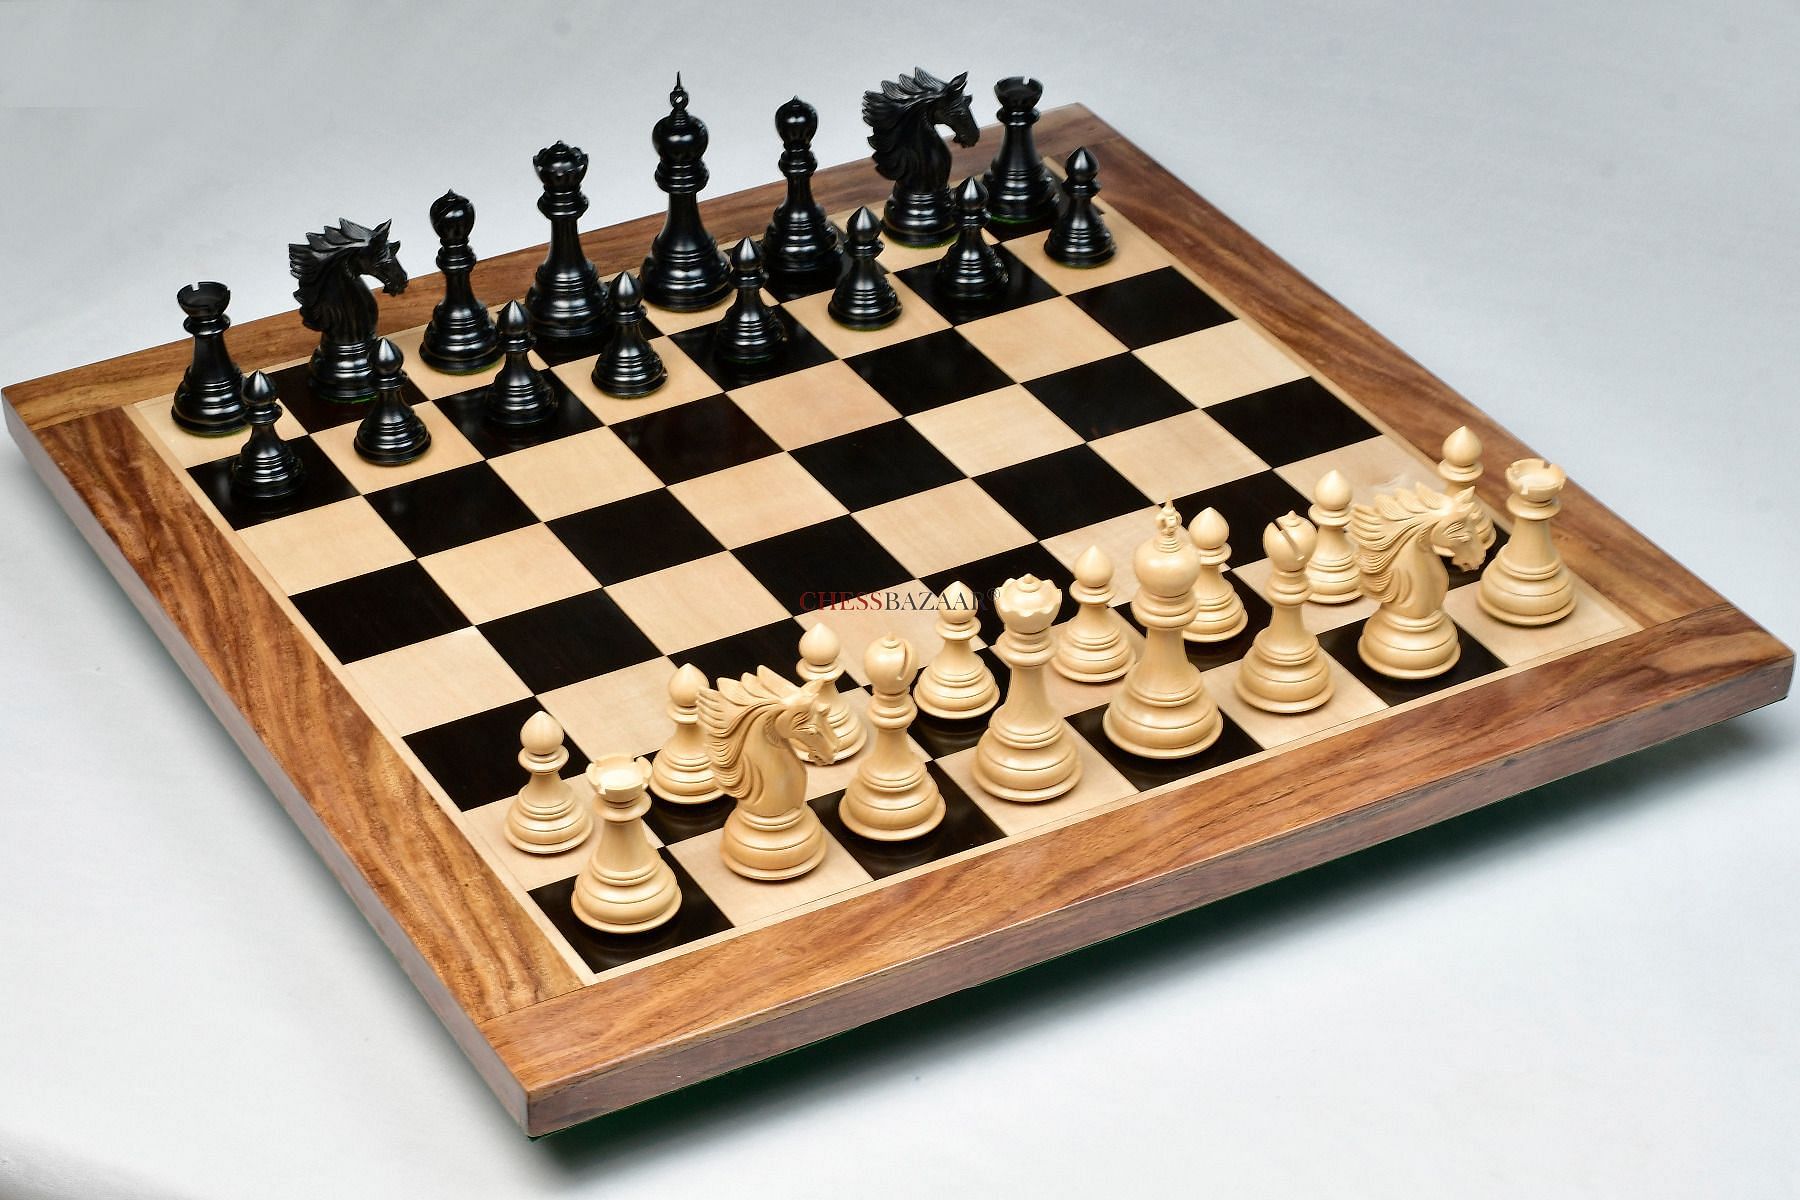 Chemical-Emitting Board Games : luxury Chess set